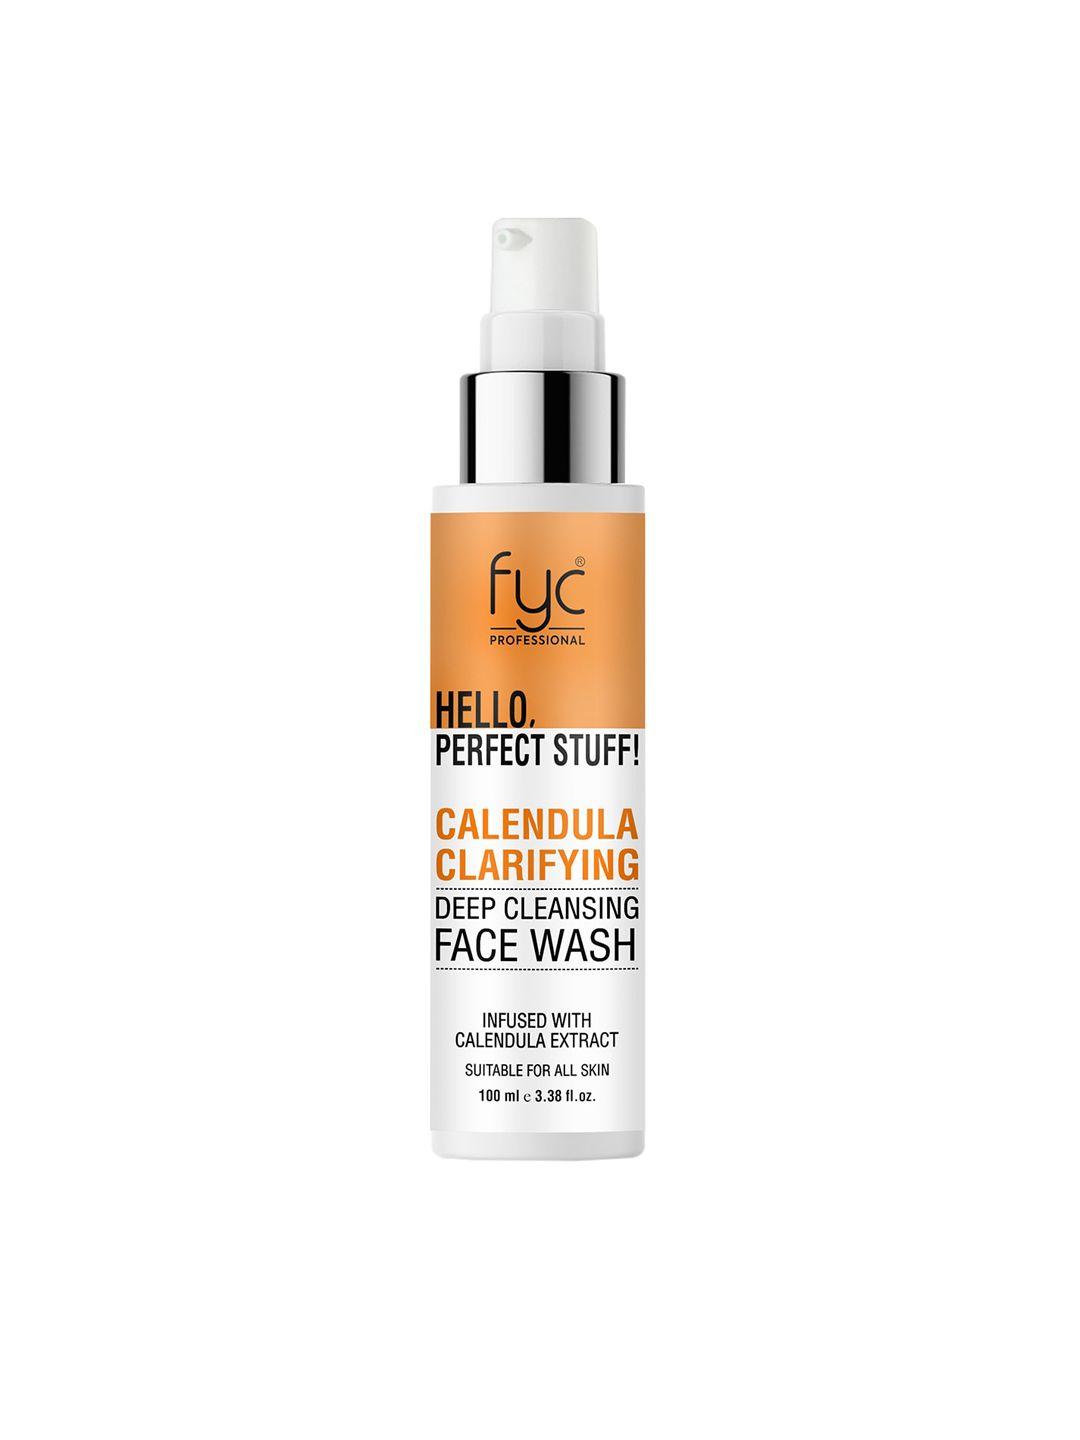 fyc professional calendula clarifying face wash, 100 ml